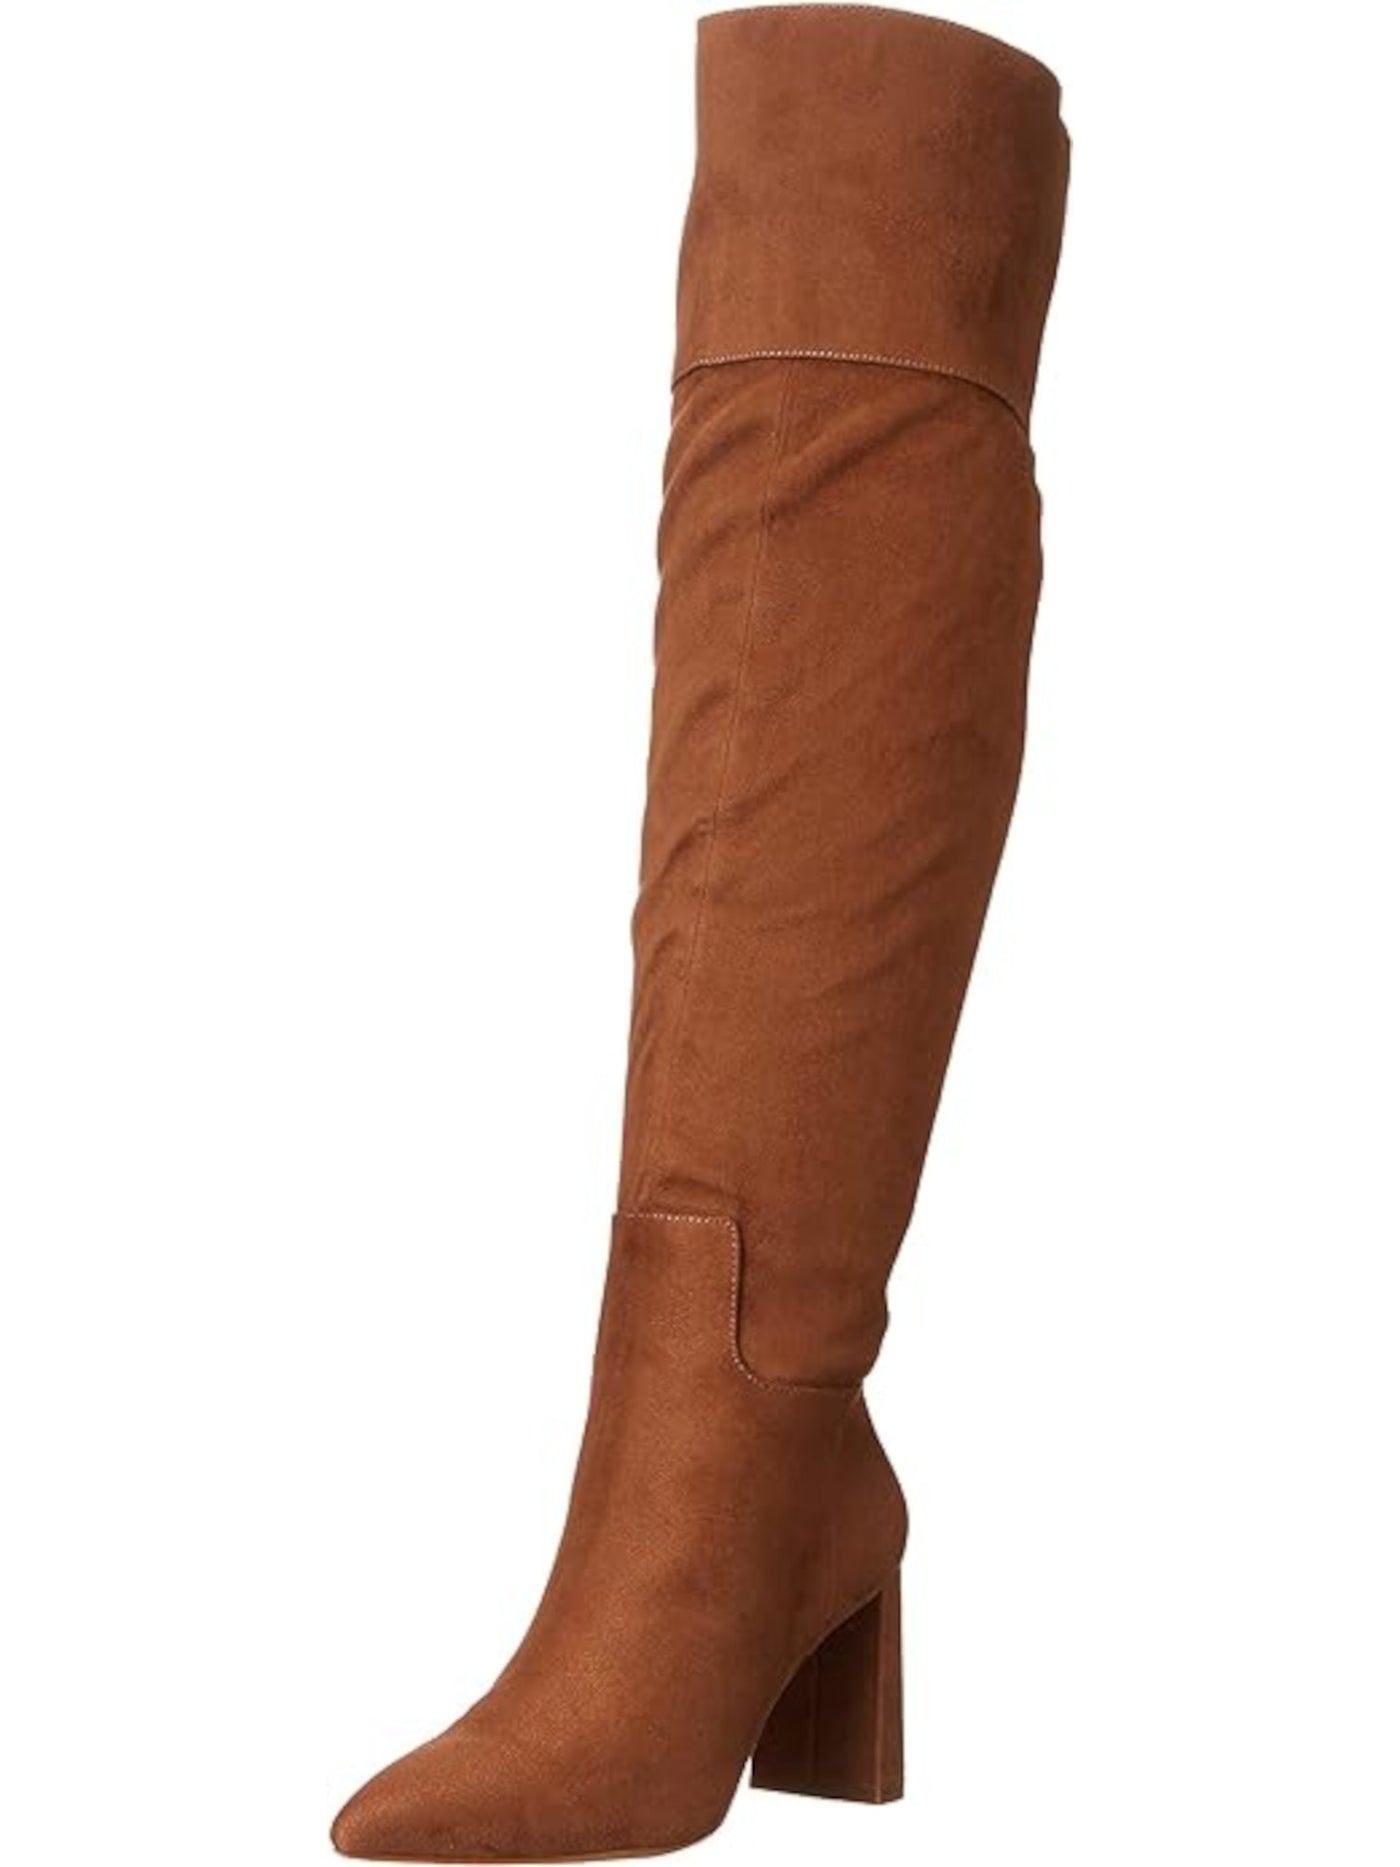 JESSICA SIMPSON Womens Brown Padded Goring Akemi Pointed Toe Block Heel Zip-Up Heeled Boots 9 M